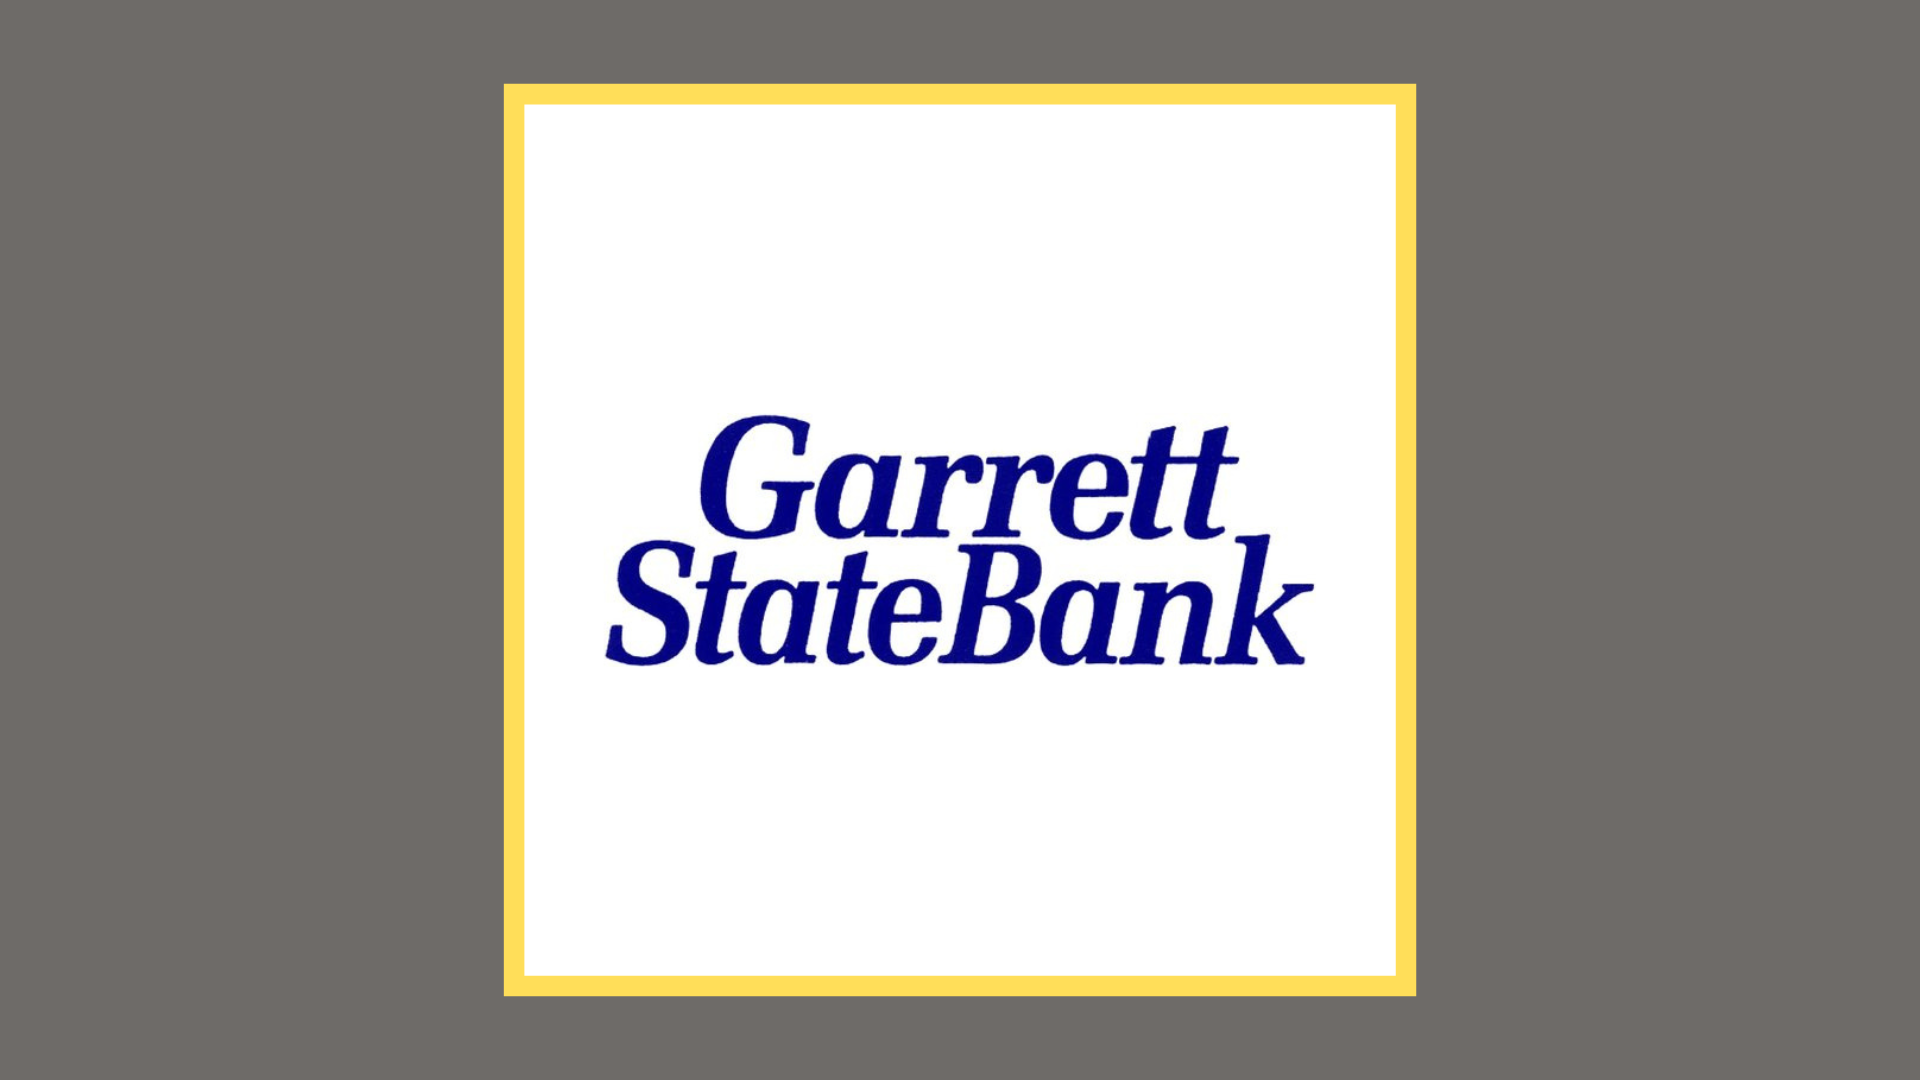 Garrett State Bank